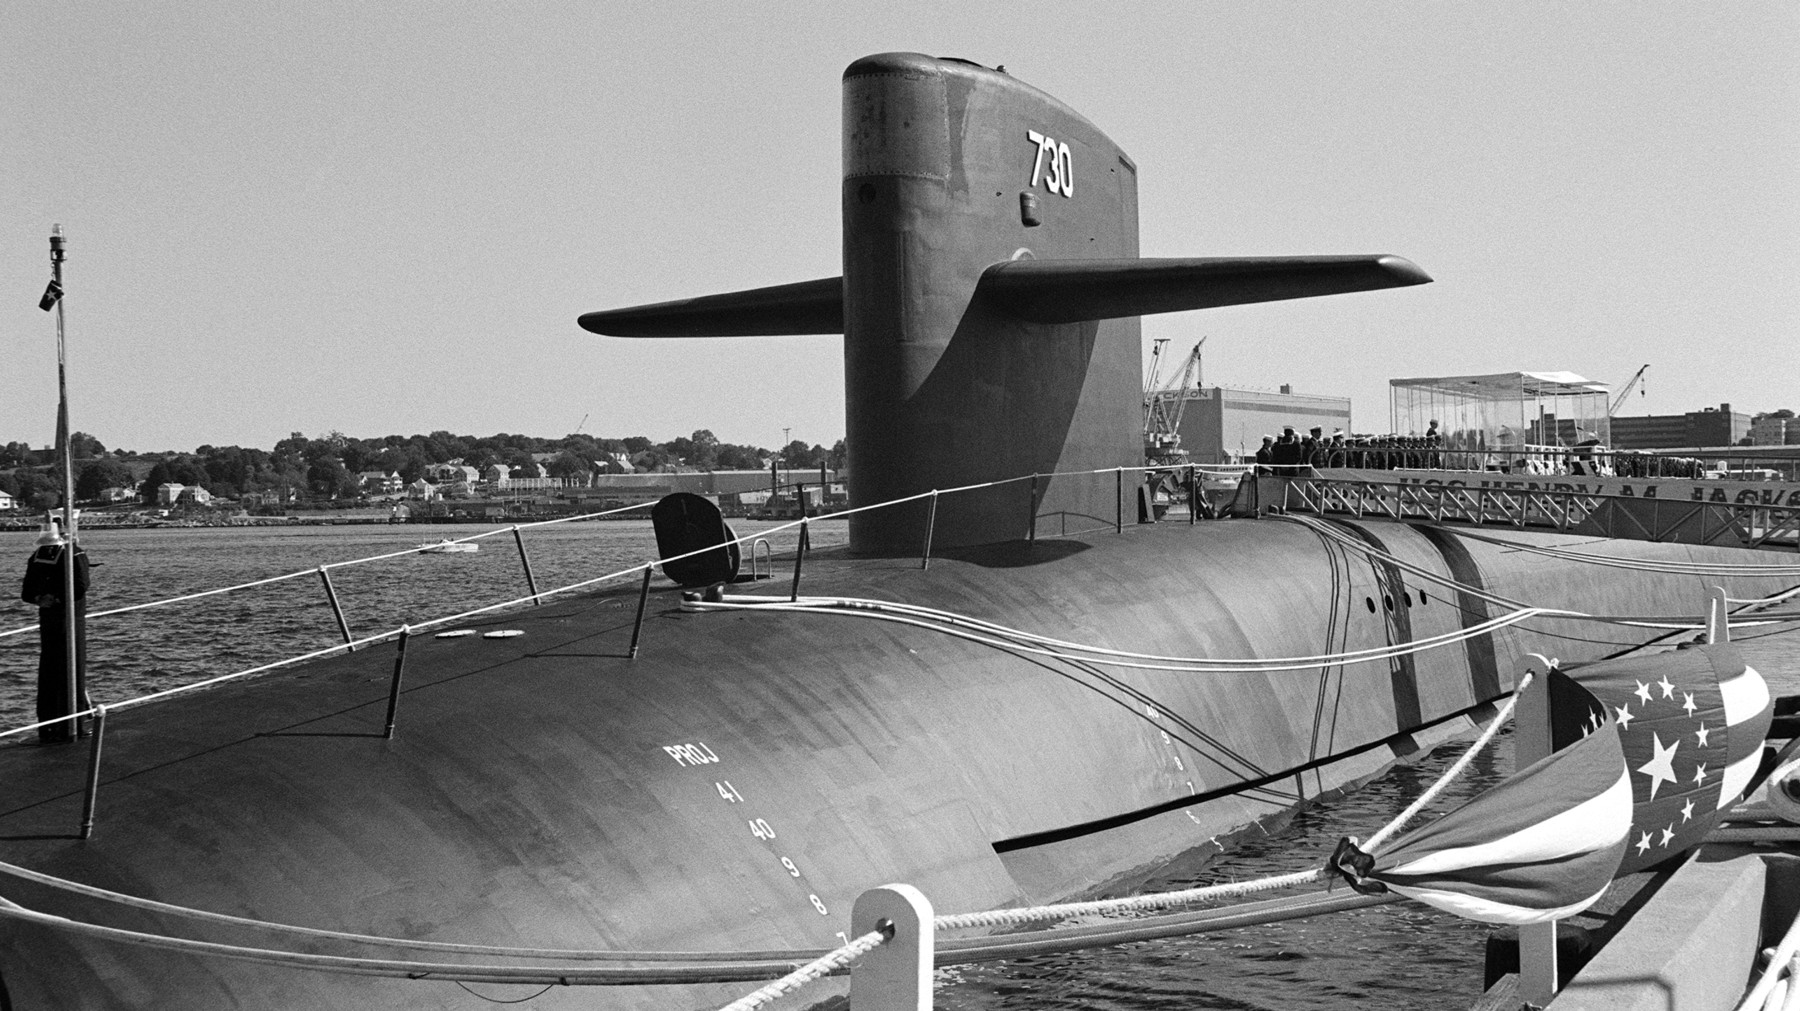 ssbn-730 uss henry m. jackson ohio class ballistic missile submarine 1984 29 commissioning ceremony groton connecticut